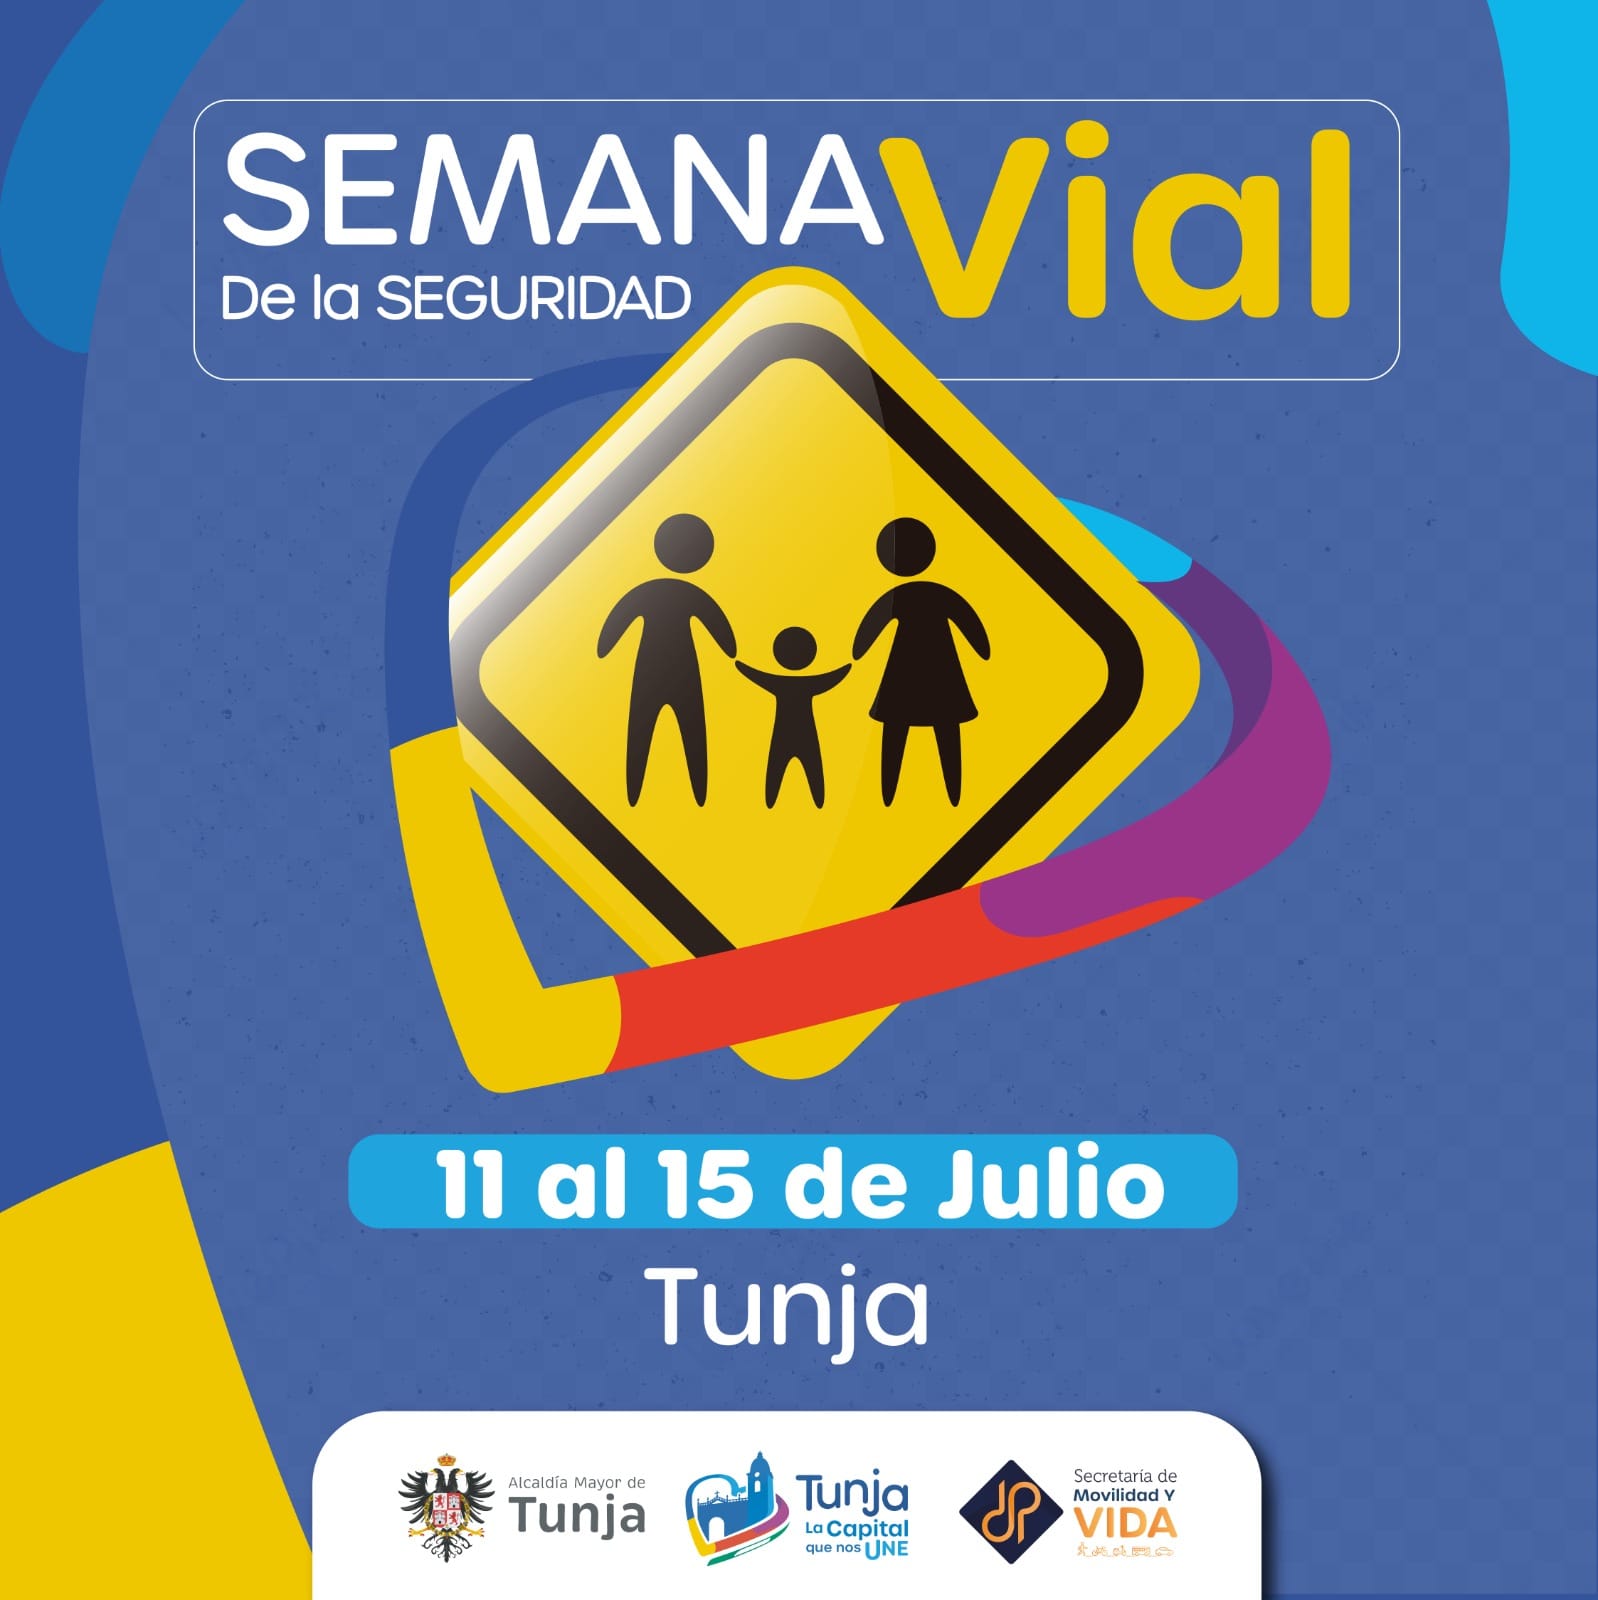 Del 11 al 15 de julio Tunja tendrá la Semana de la Seguridad Vial.